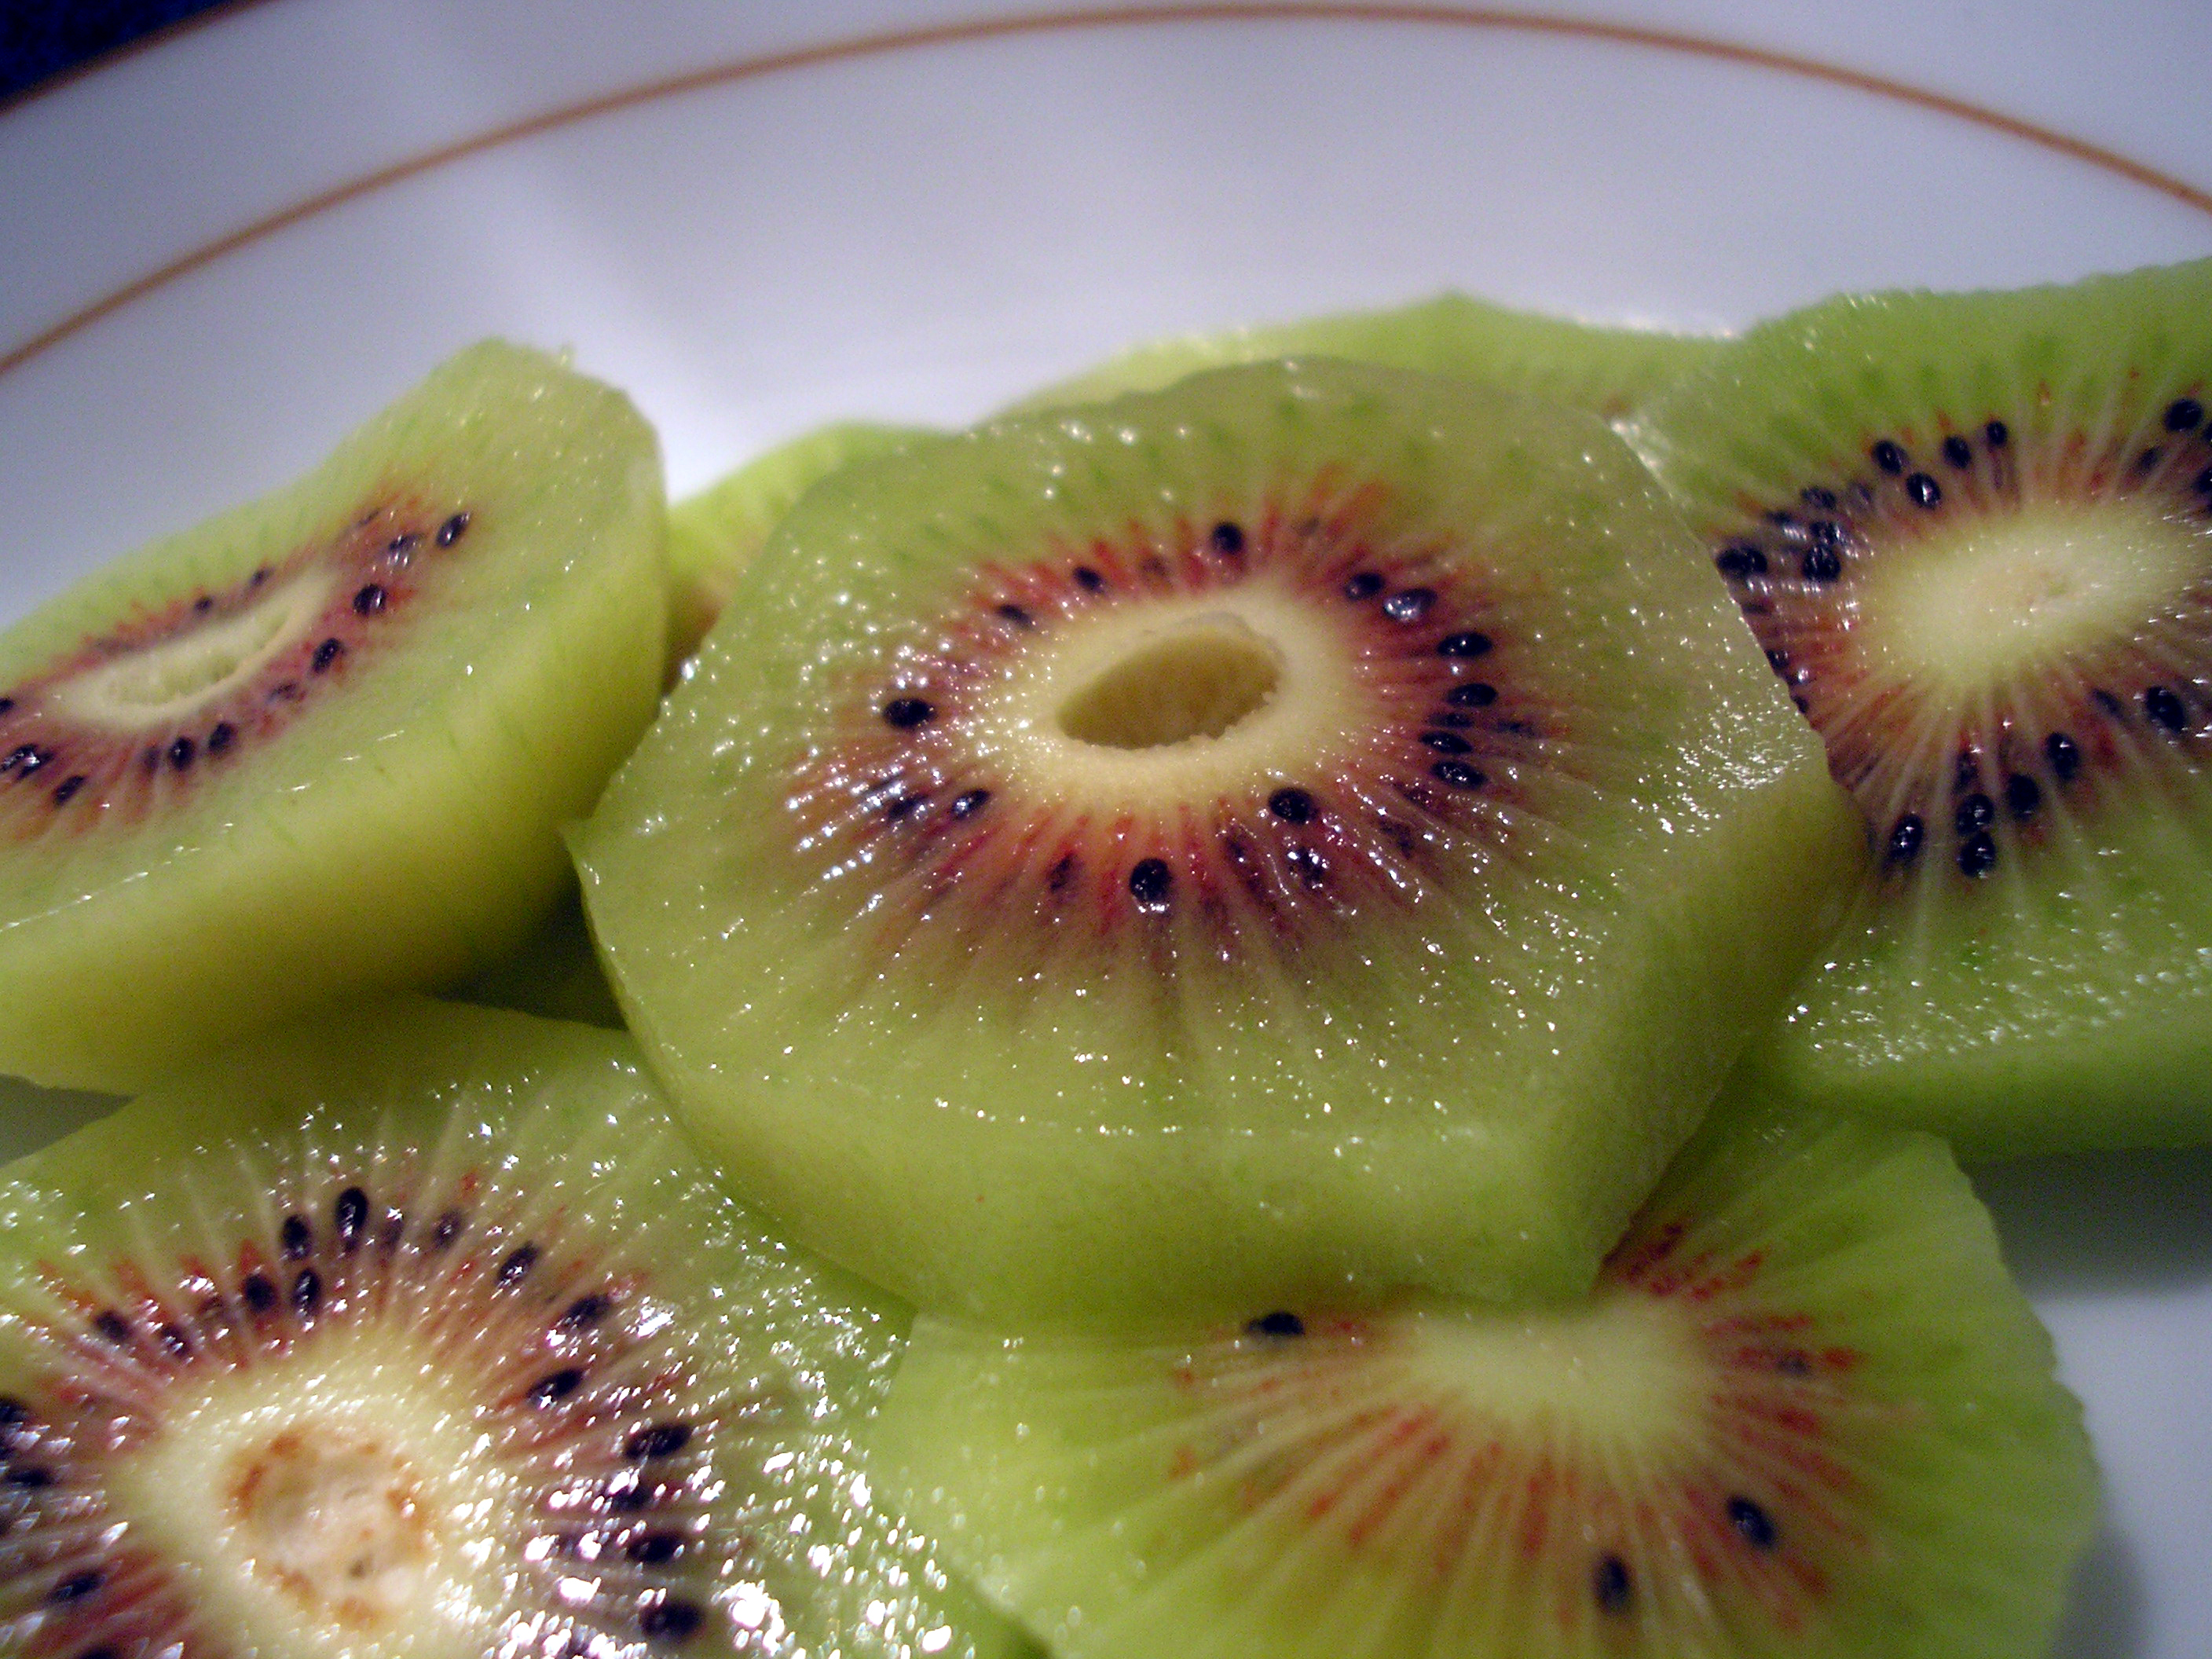 File:Red kiwi fruit slices.jpg - Wikipedia